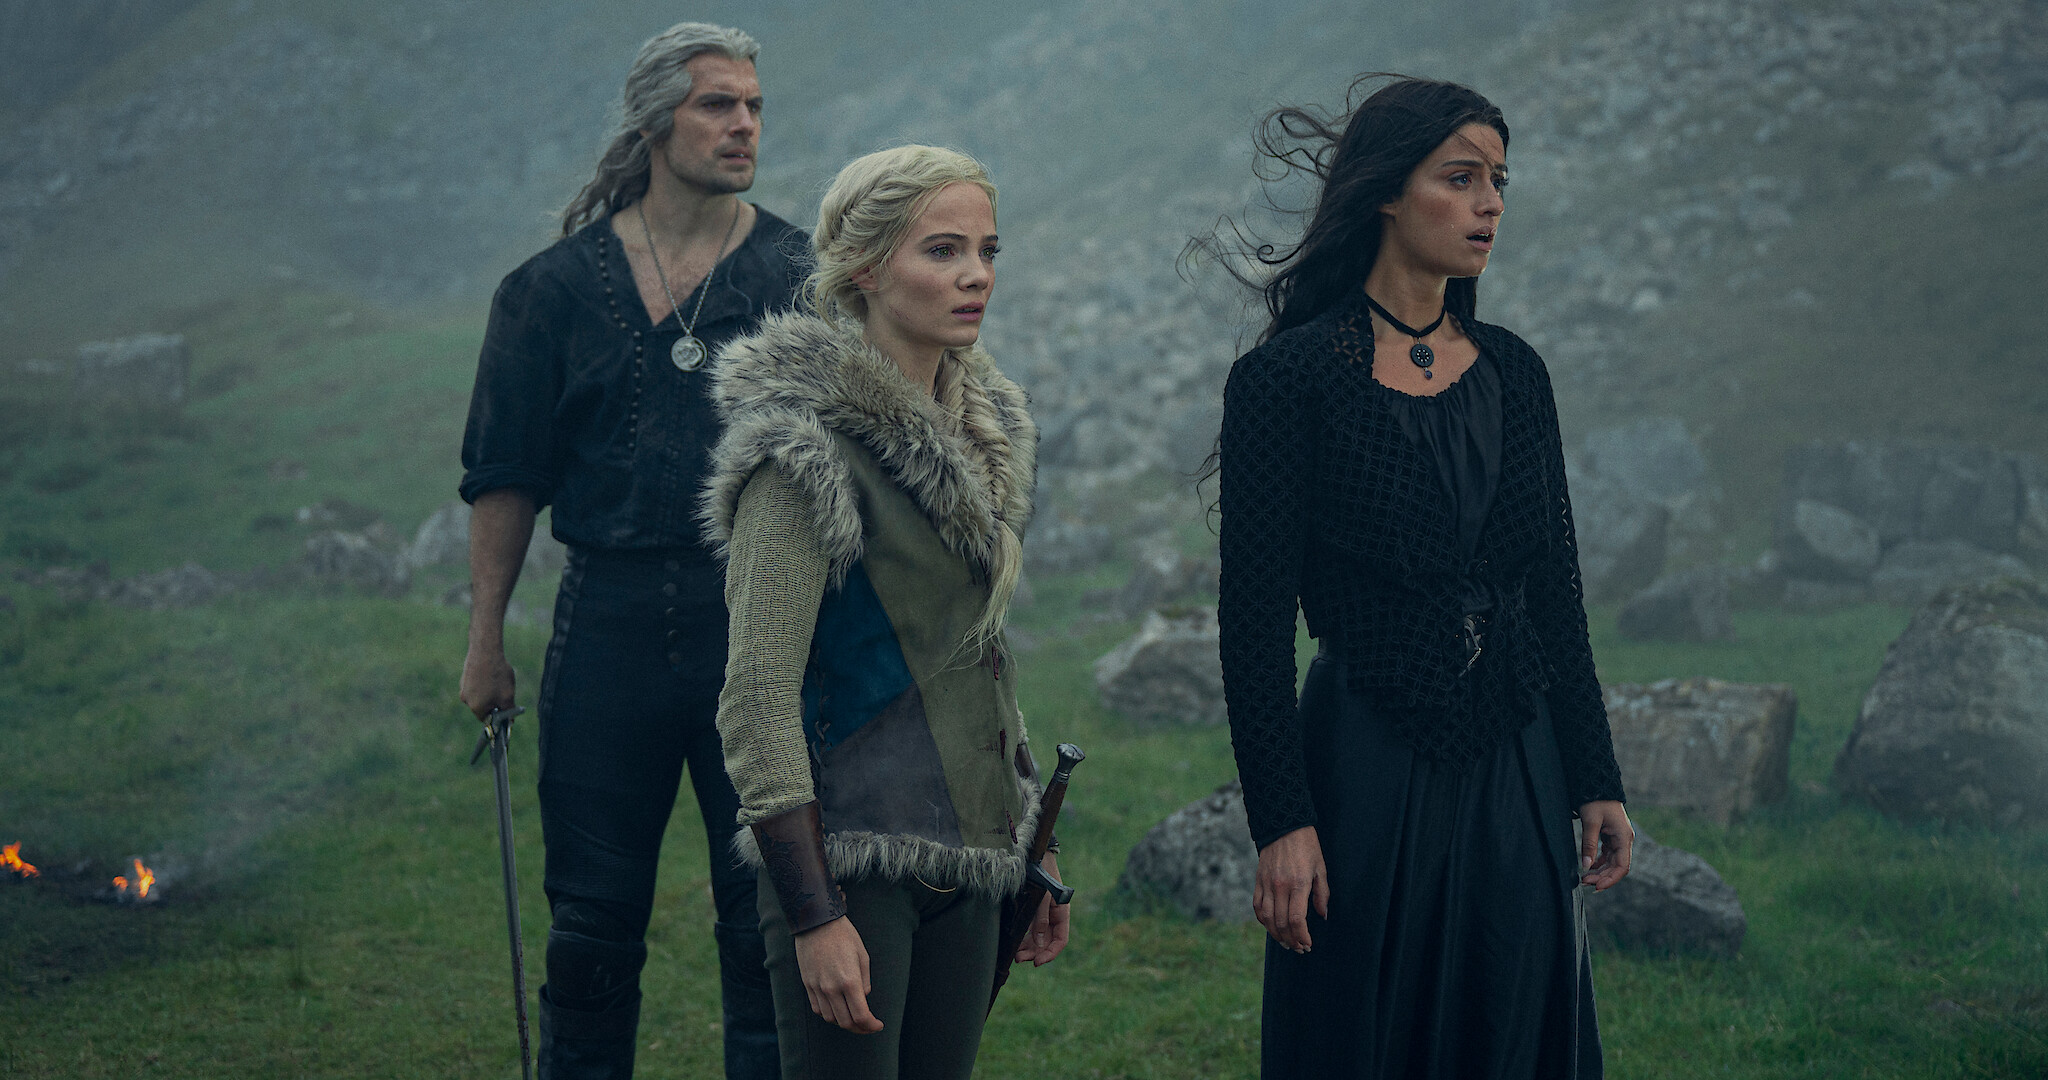 Henry Cavill as Geralt of Rivia, Freya Allan as Ciri and Anya Chalotra as Yennefer of Vengerberg.